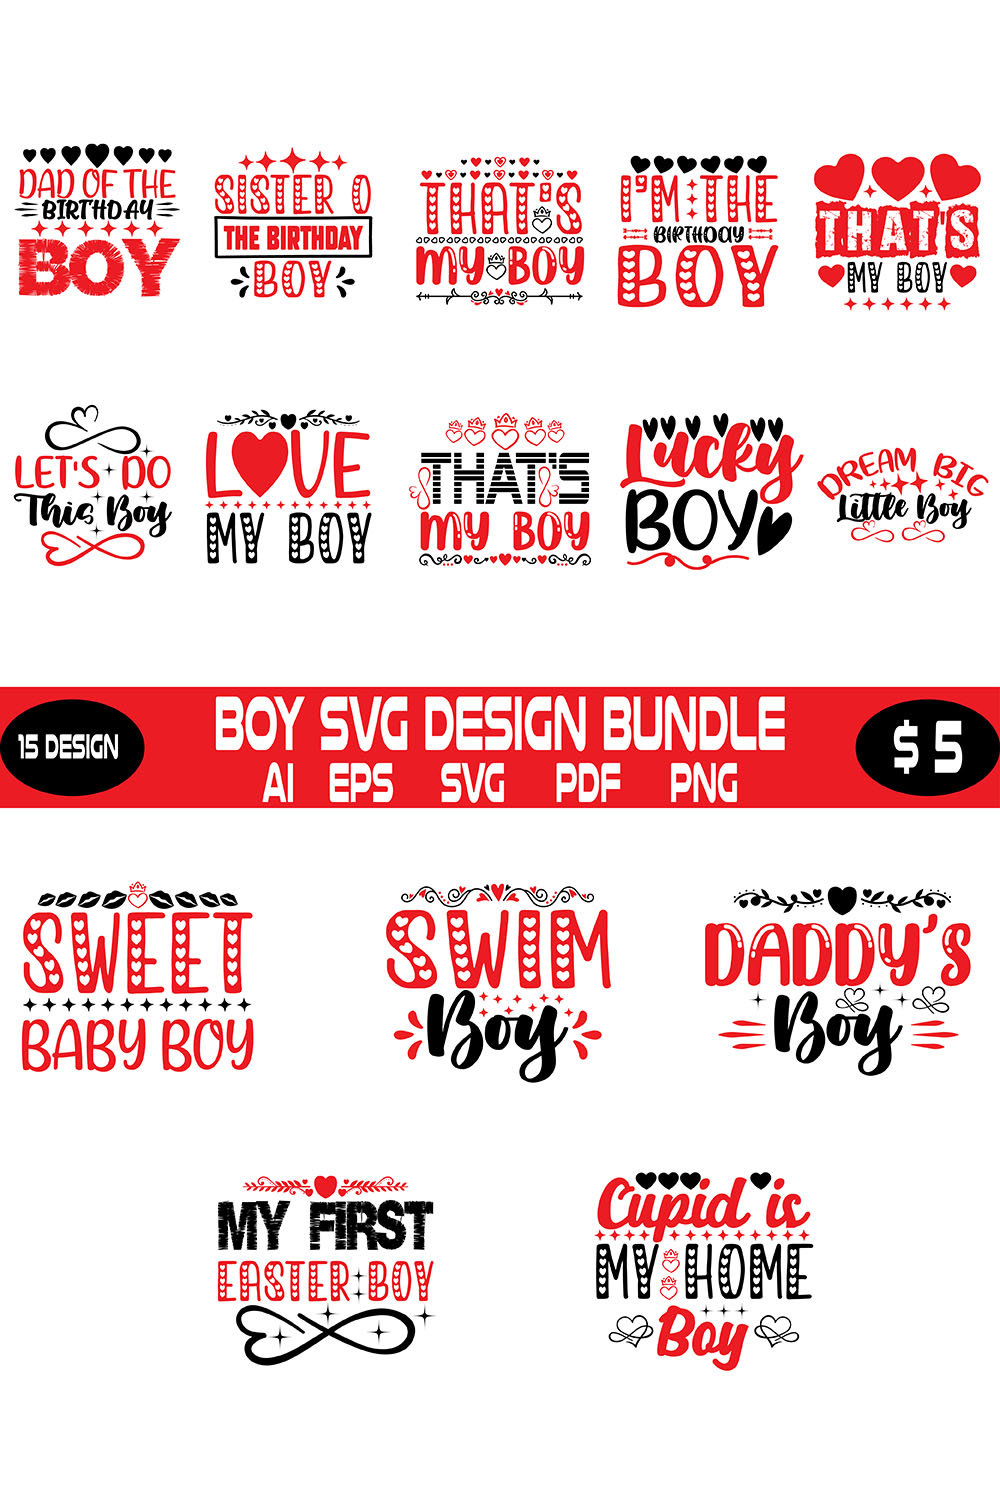 Boy Svg Design Bundle pinterest preview image.